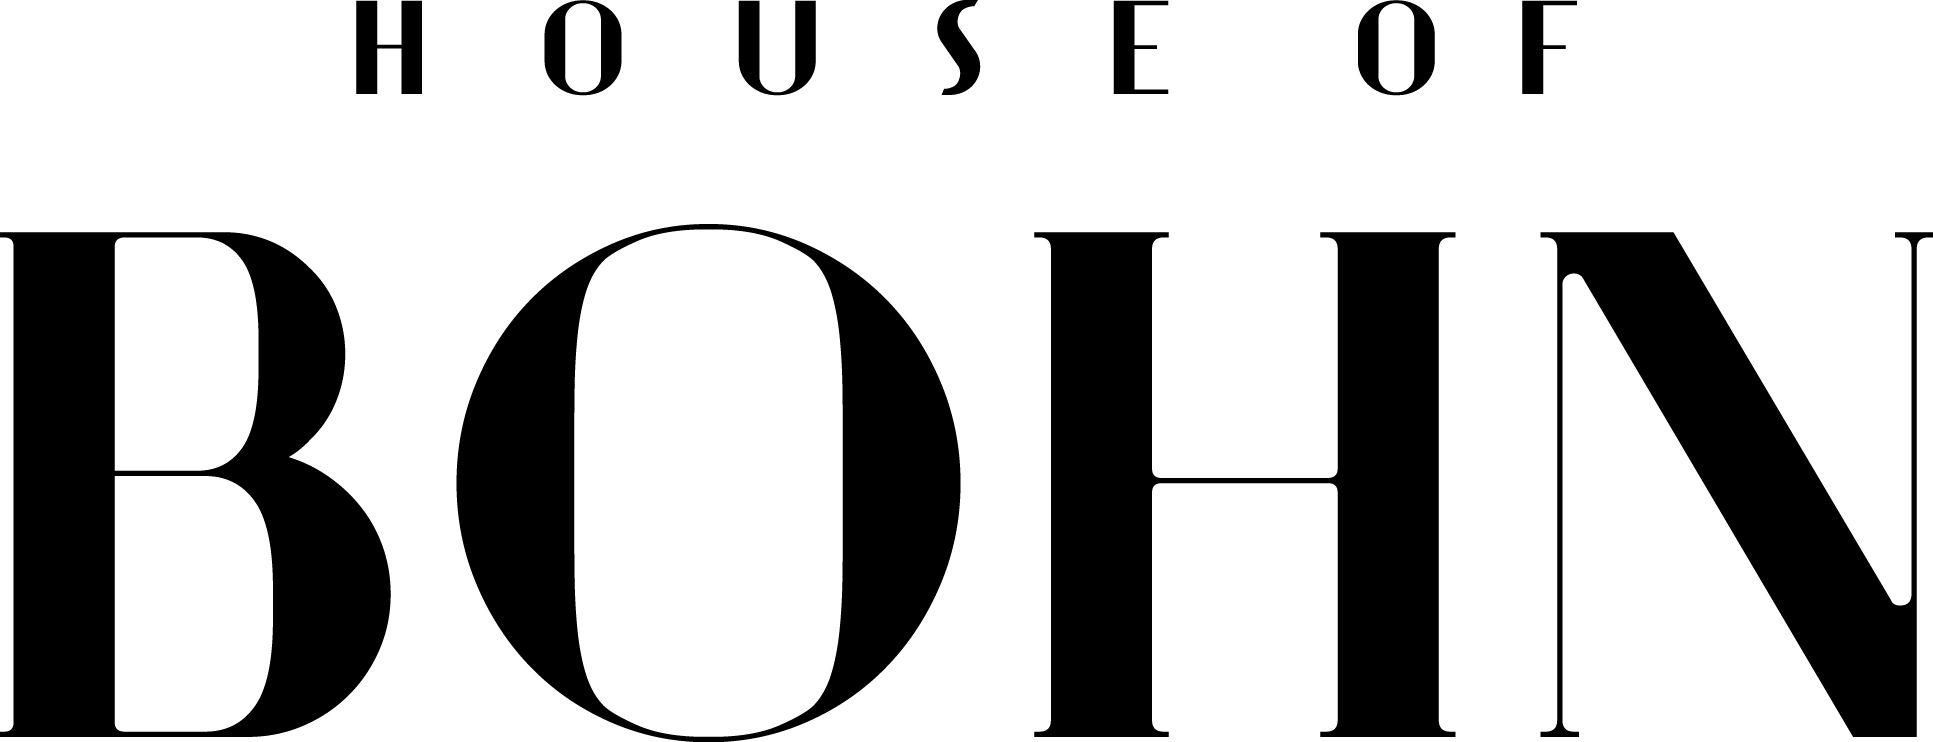 Bohn Logo - HOUSE OF BOHN Design Vancouver